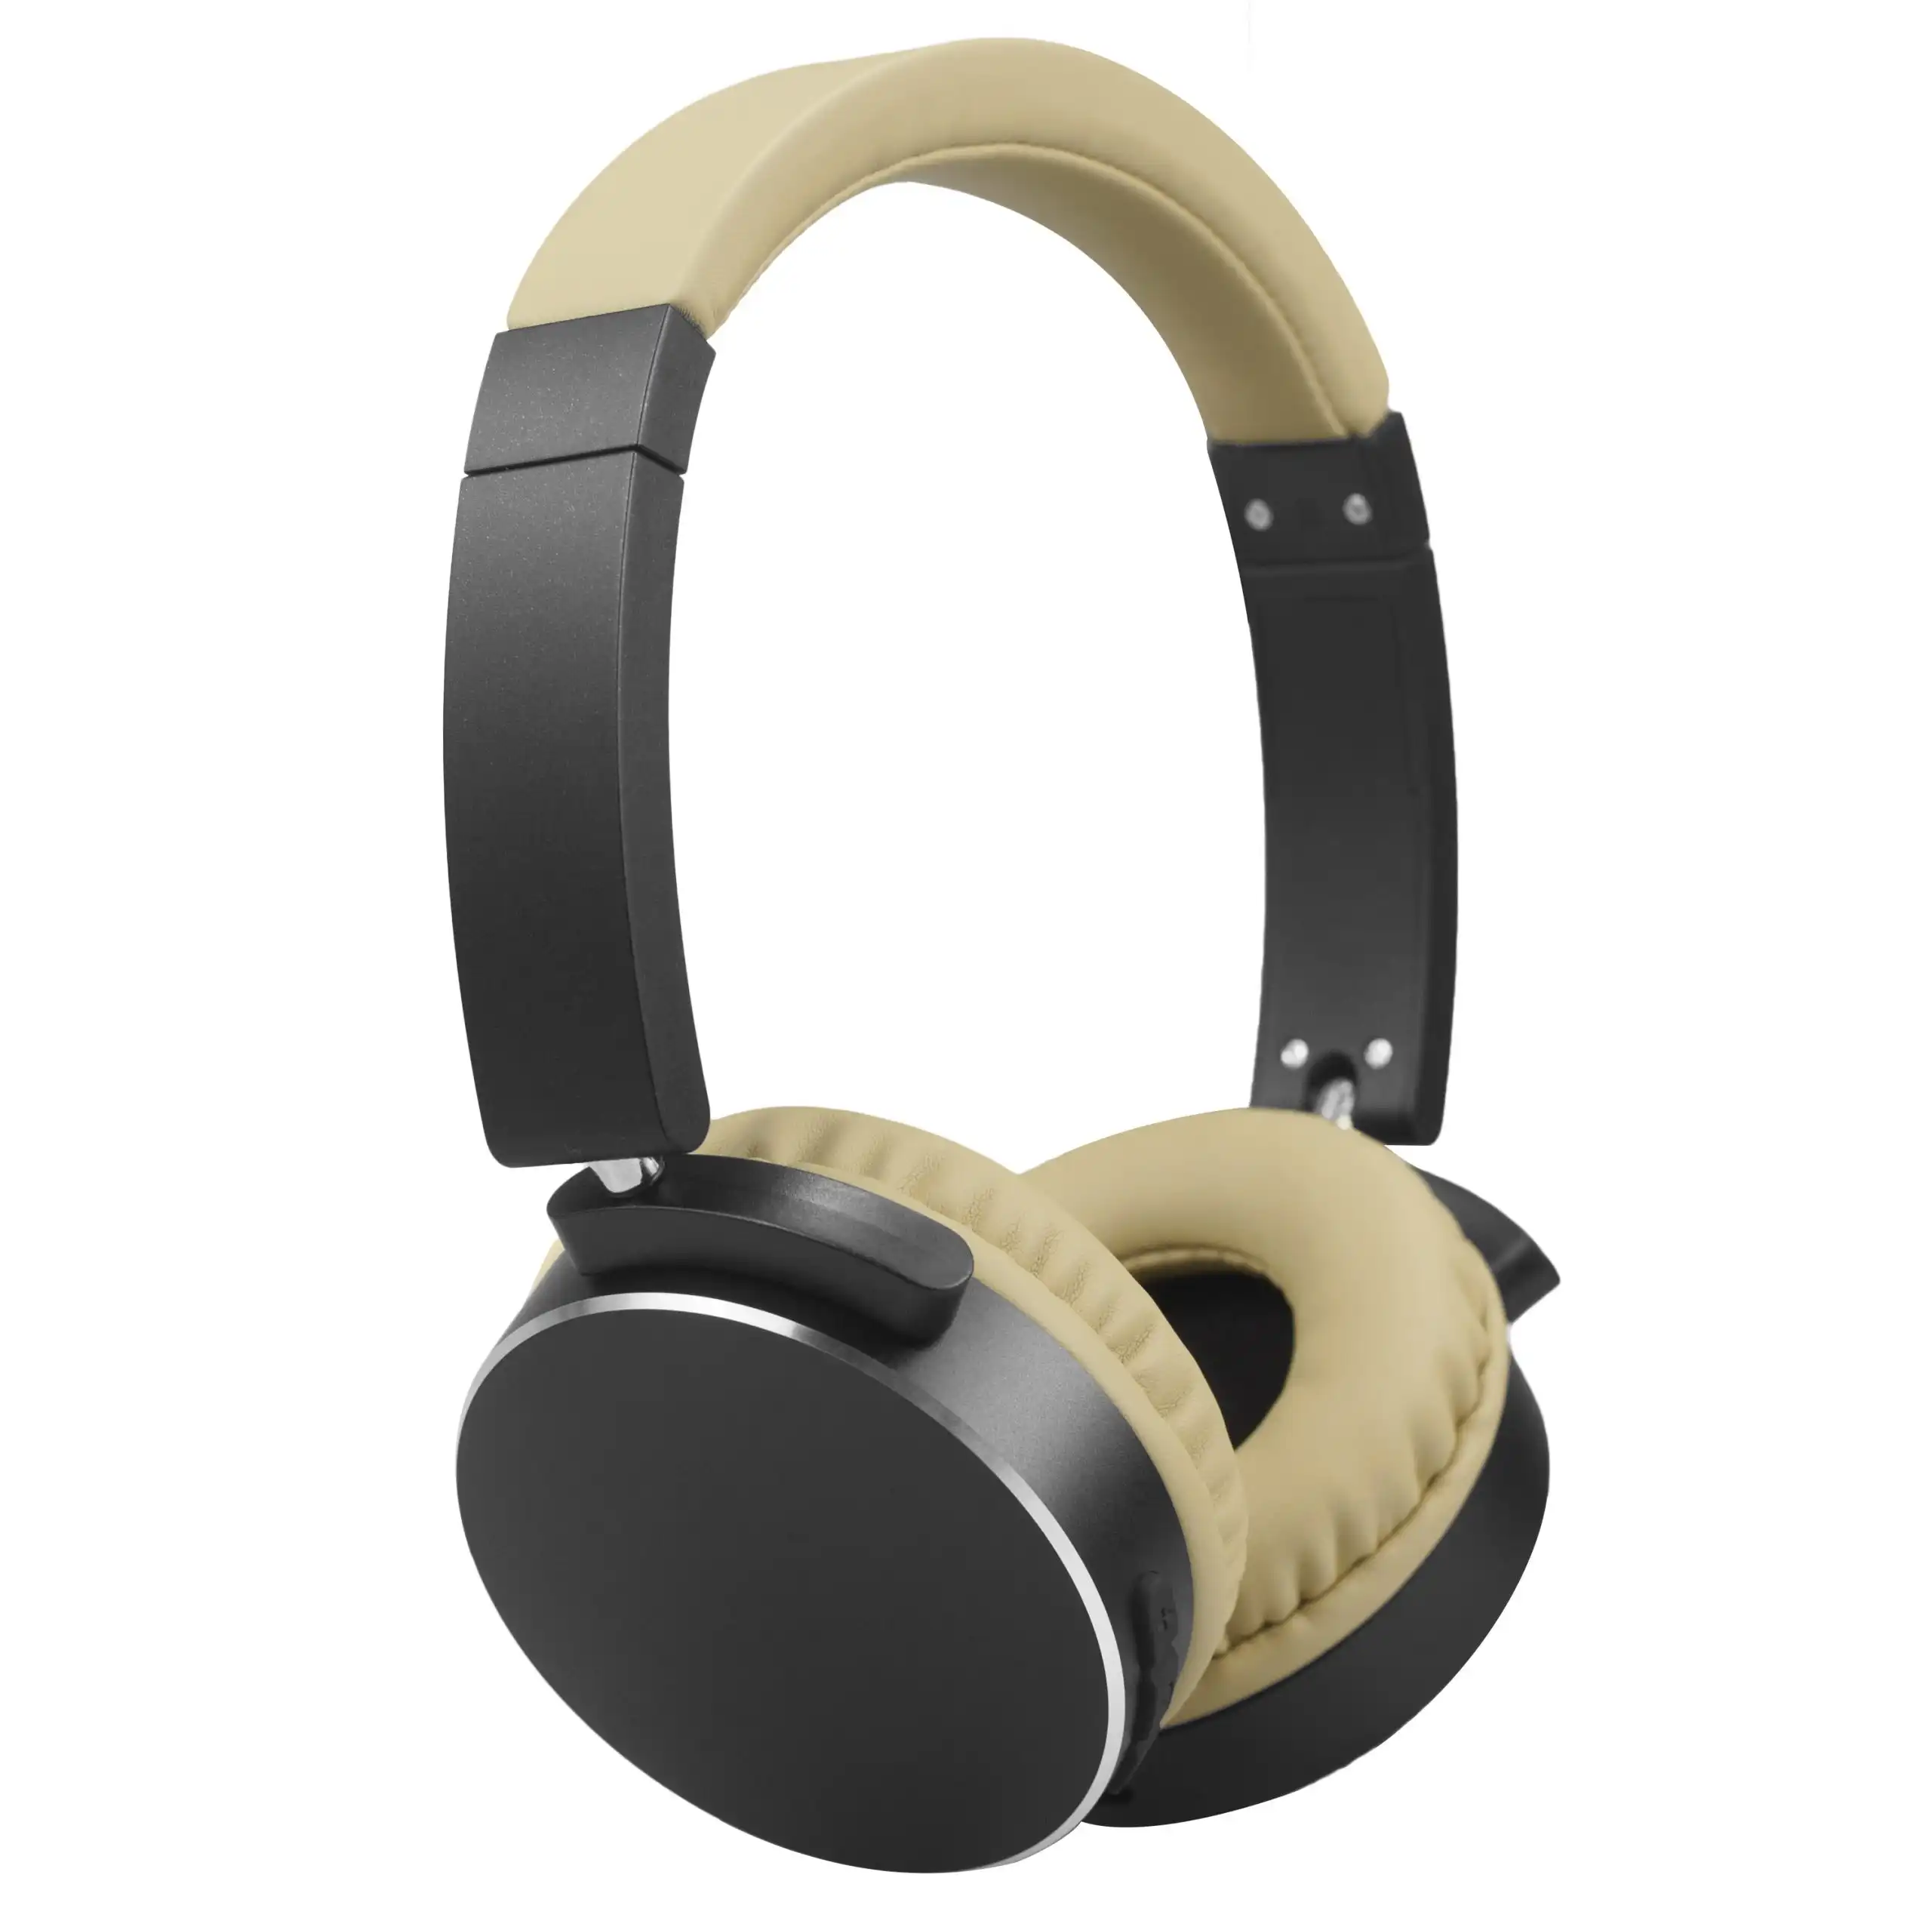 TODO Stereo Bluetooth 5.0 Headphones Earphones Rechargeable Battery Neodymium Driver - Black Cream